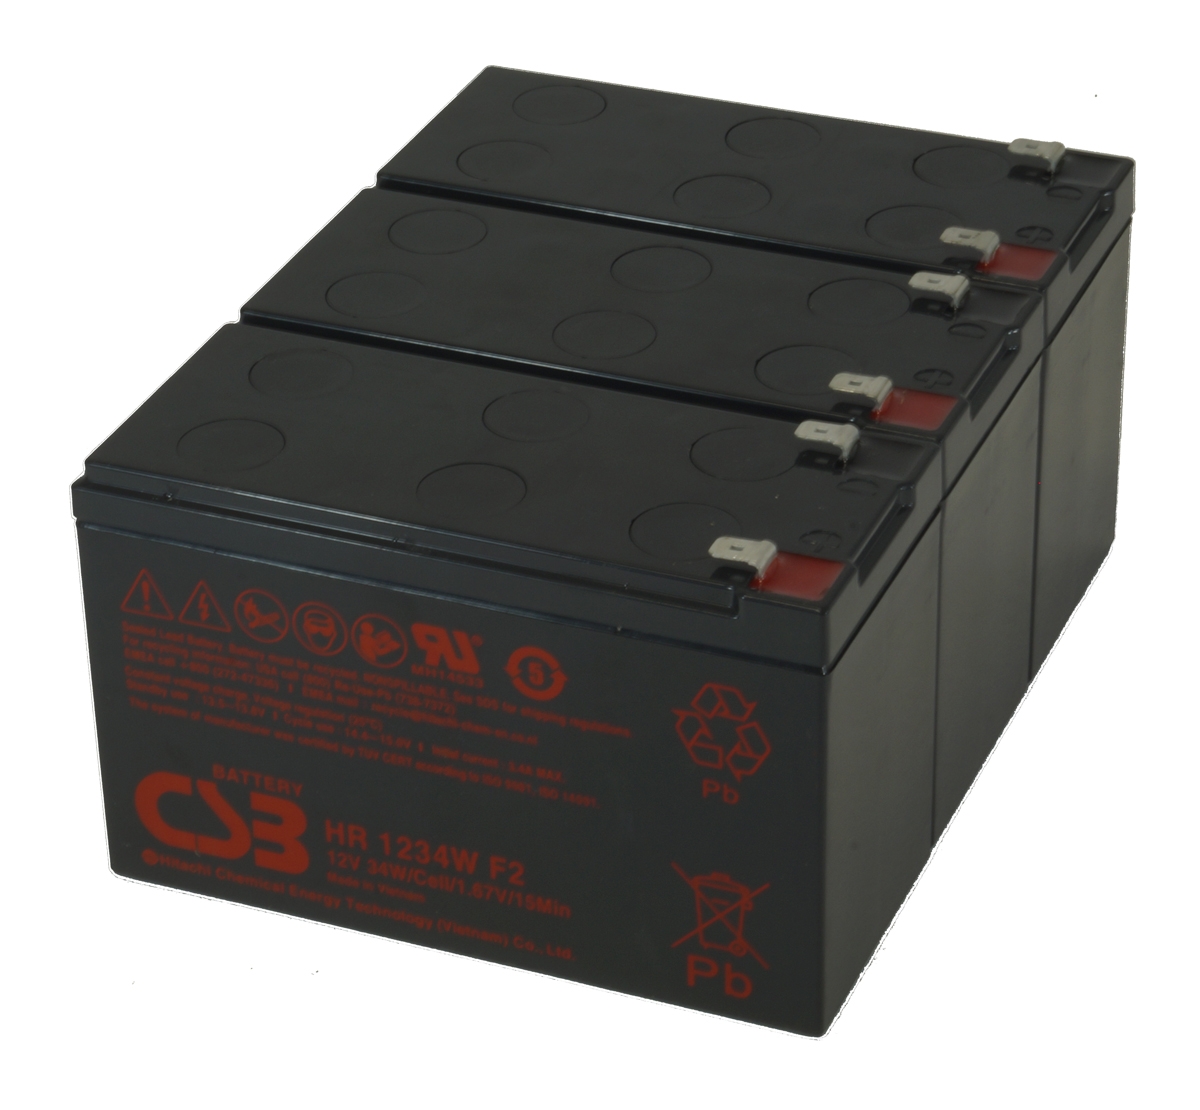 UPS vervangings batterij 3 x HR1234WF2 CSB Battery